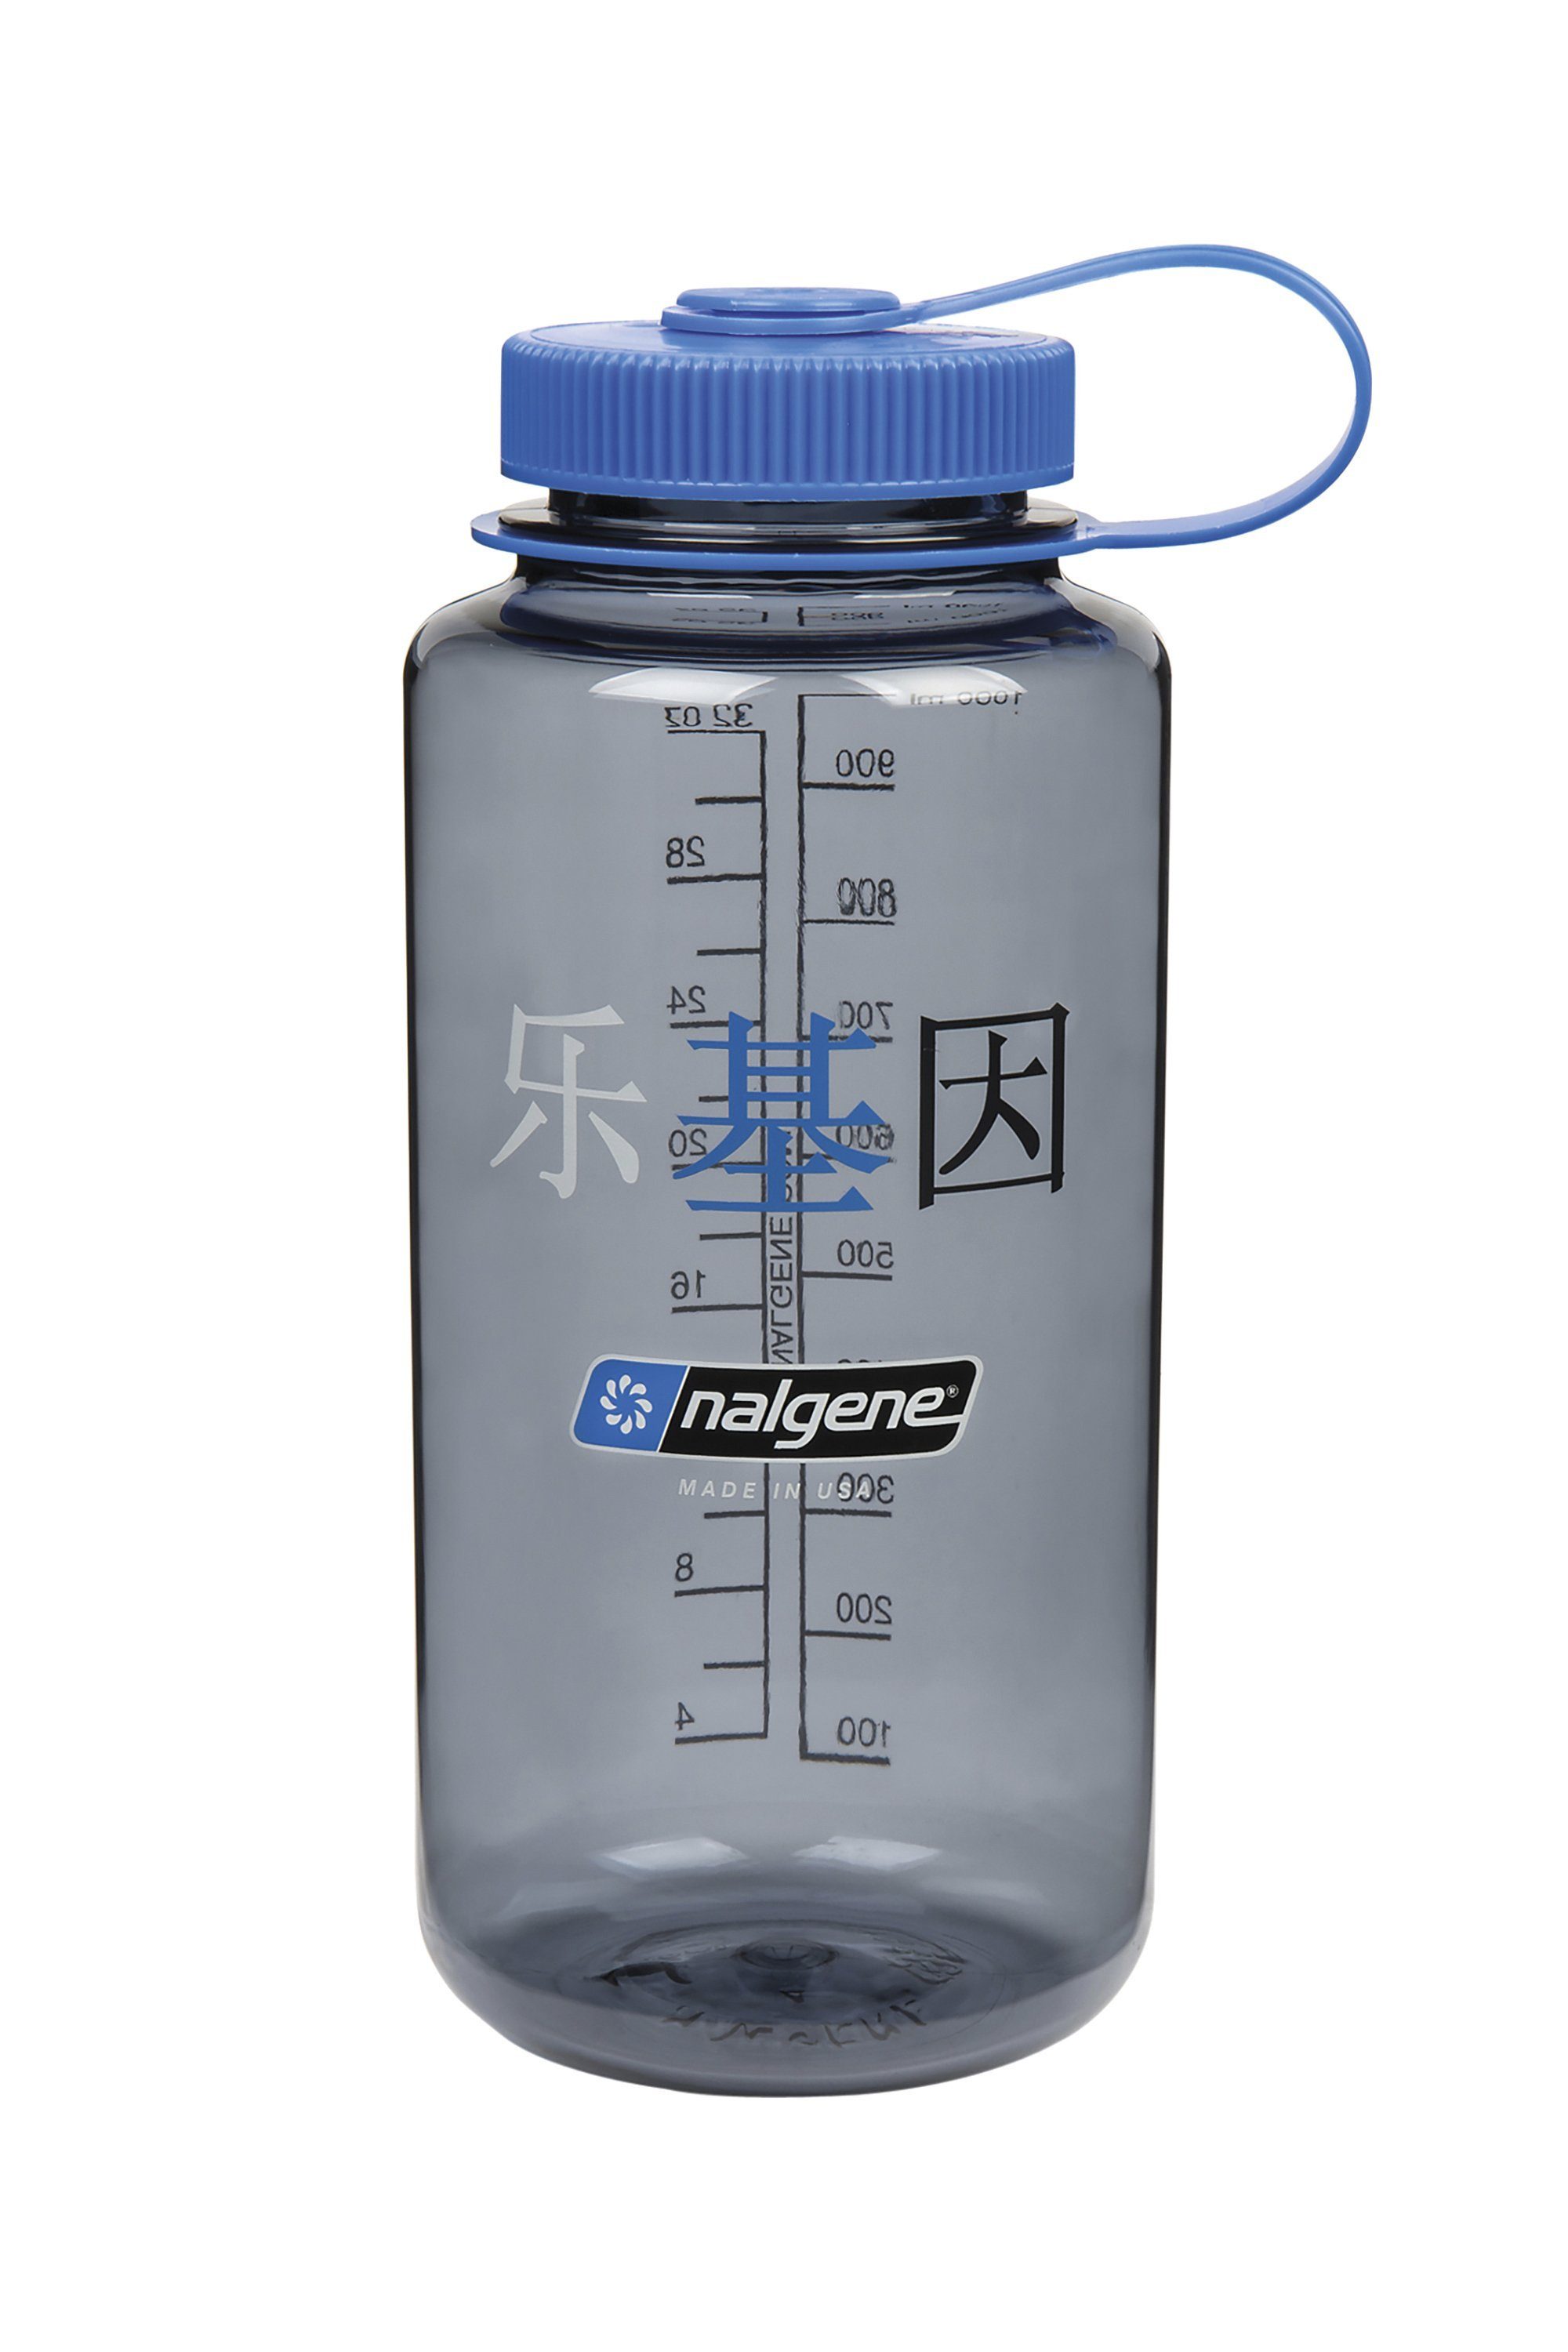 L Nalgene Nalgene grau gene Trinkflasche 1 Sustain' happy 'WH Trinkflasche